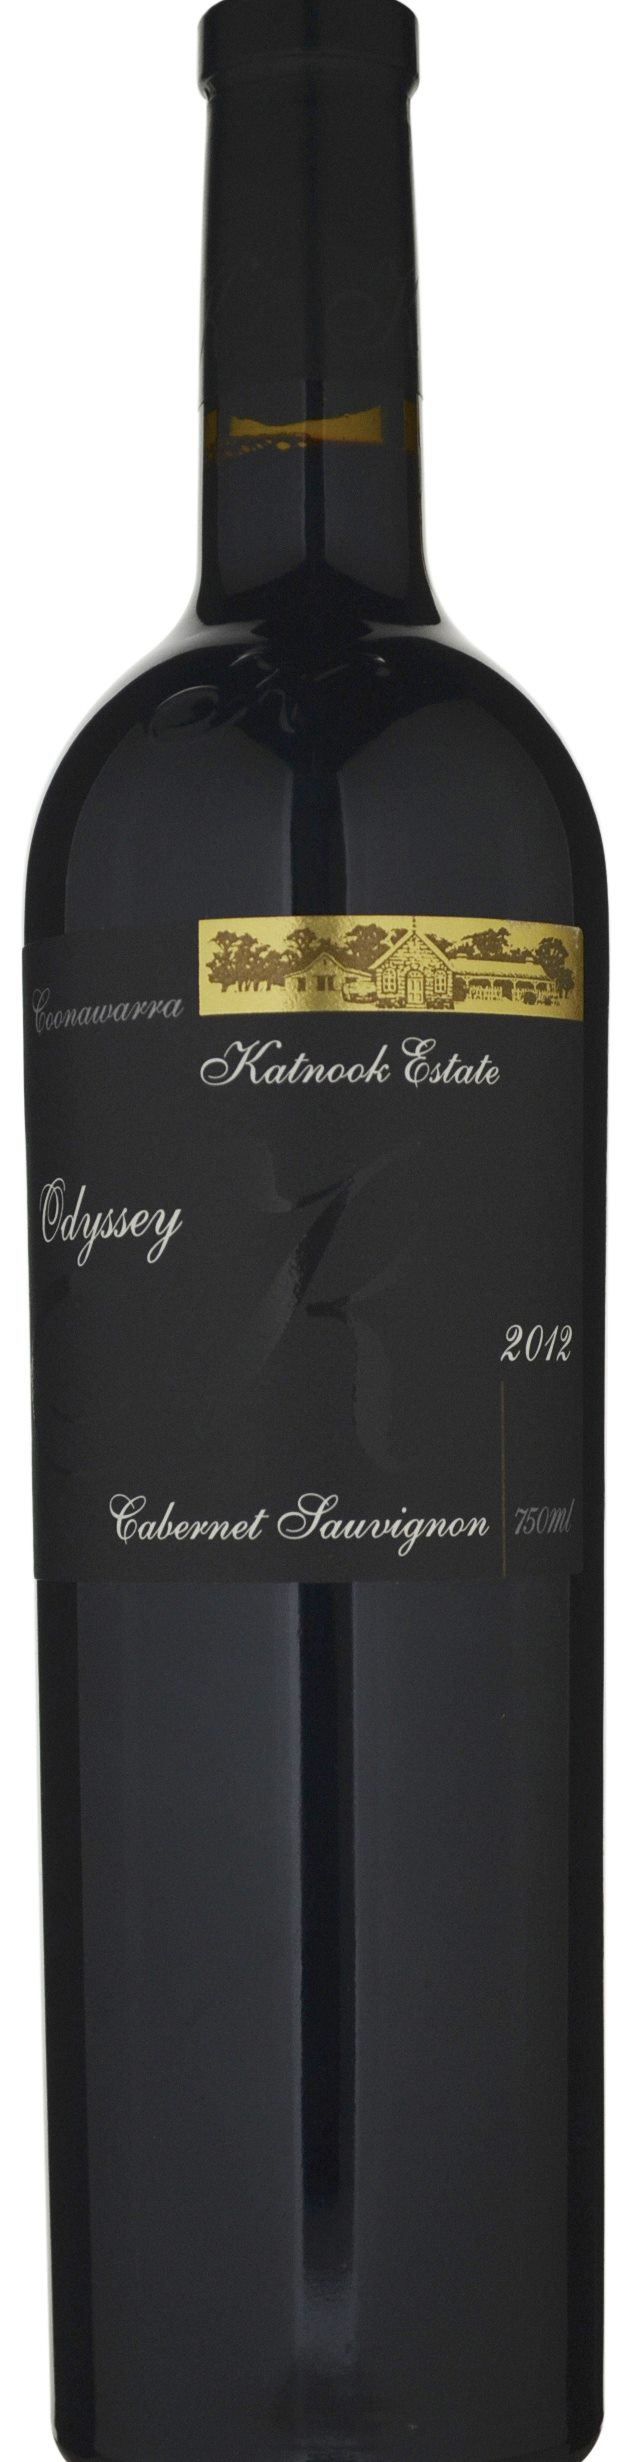 Katnook Estate Odyssey Cabernet Sauvignon 2012